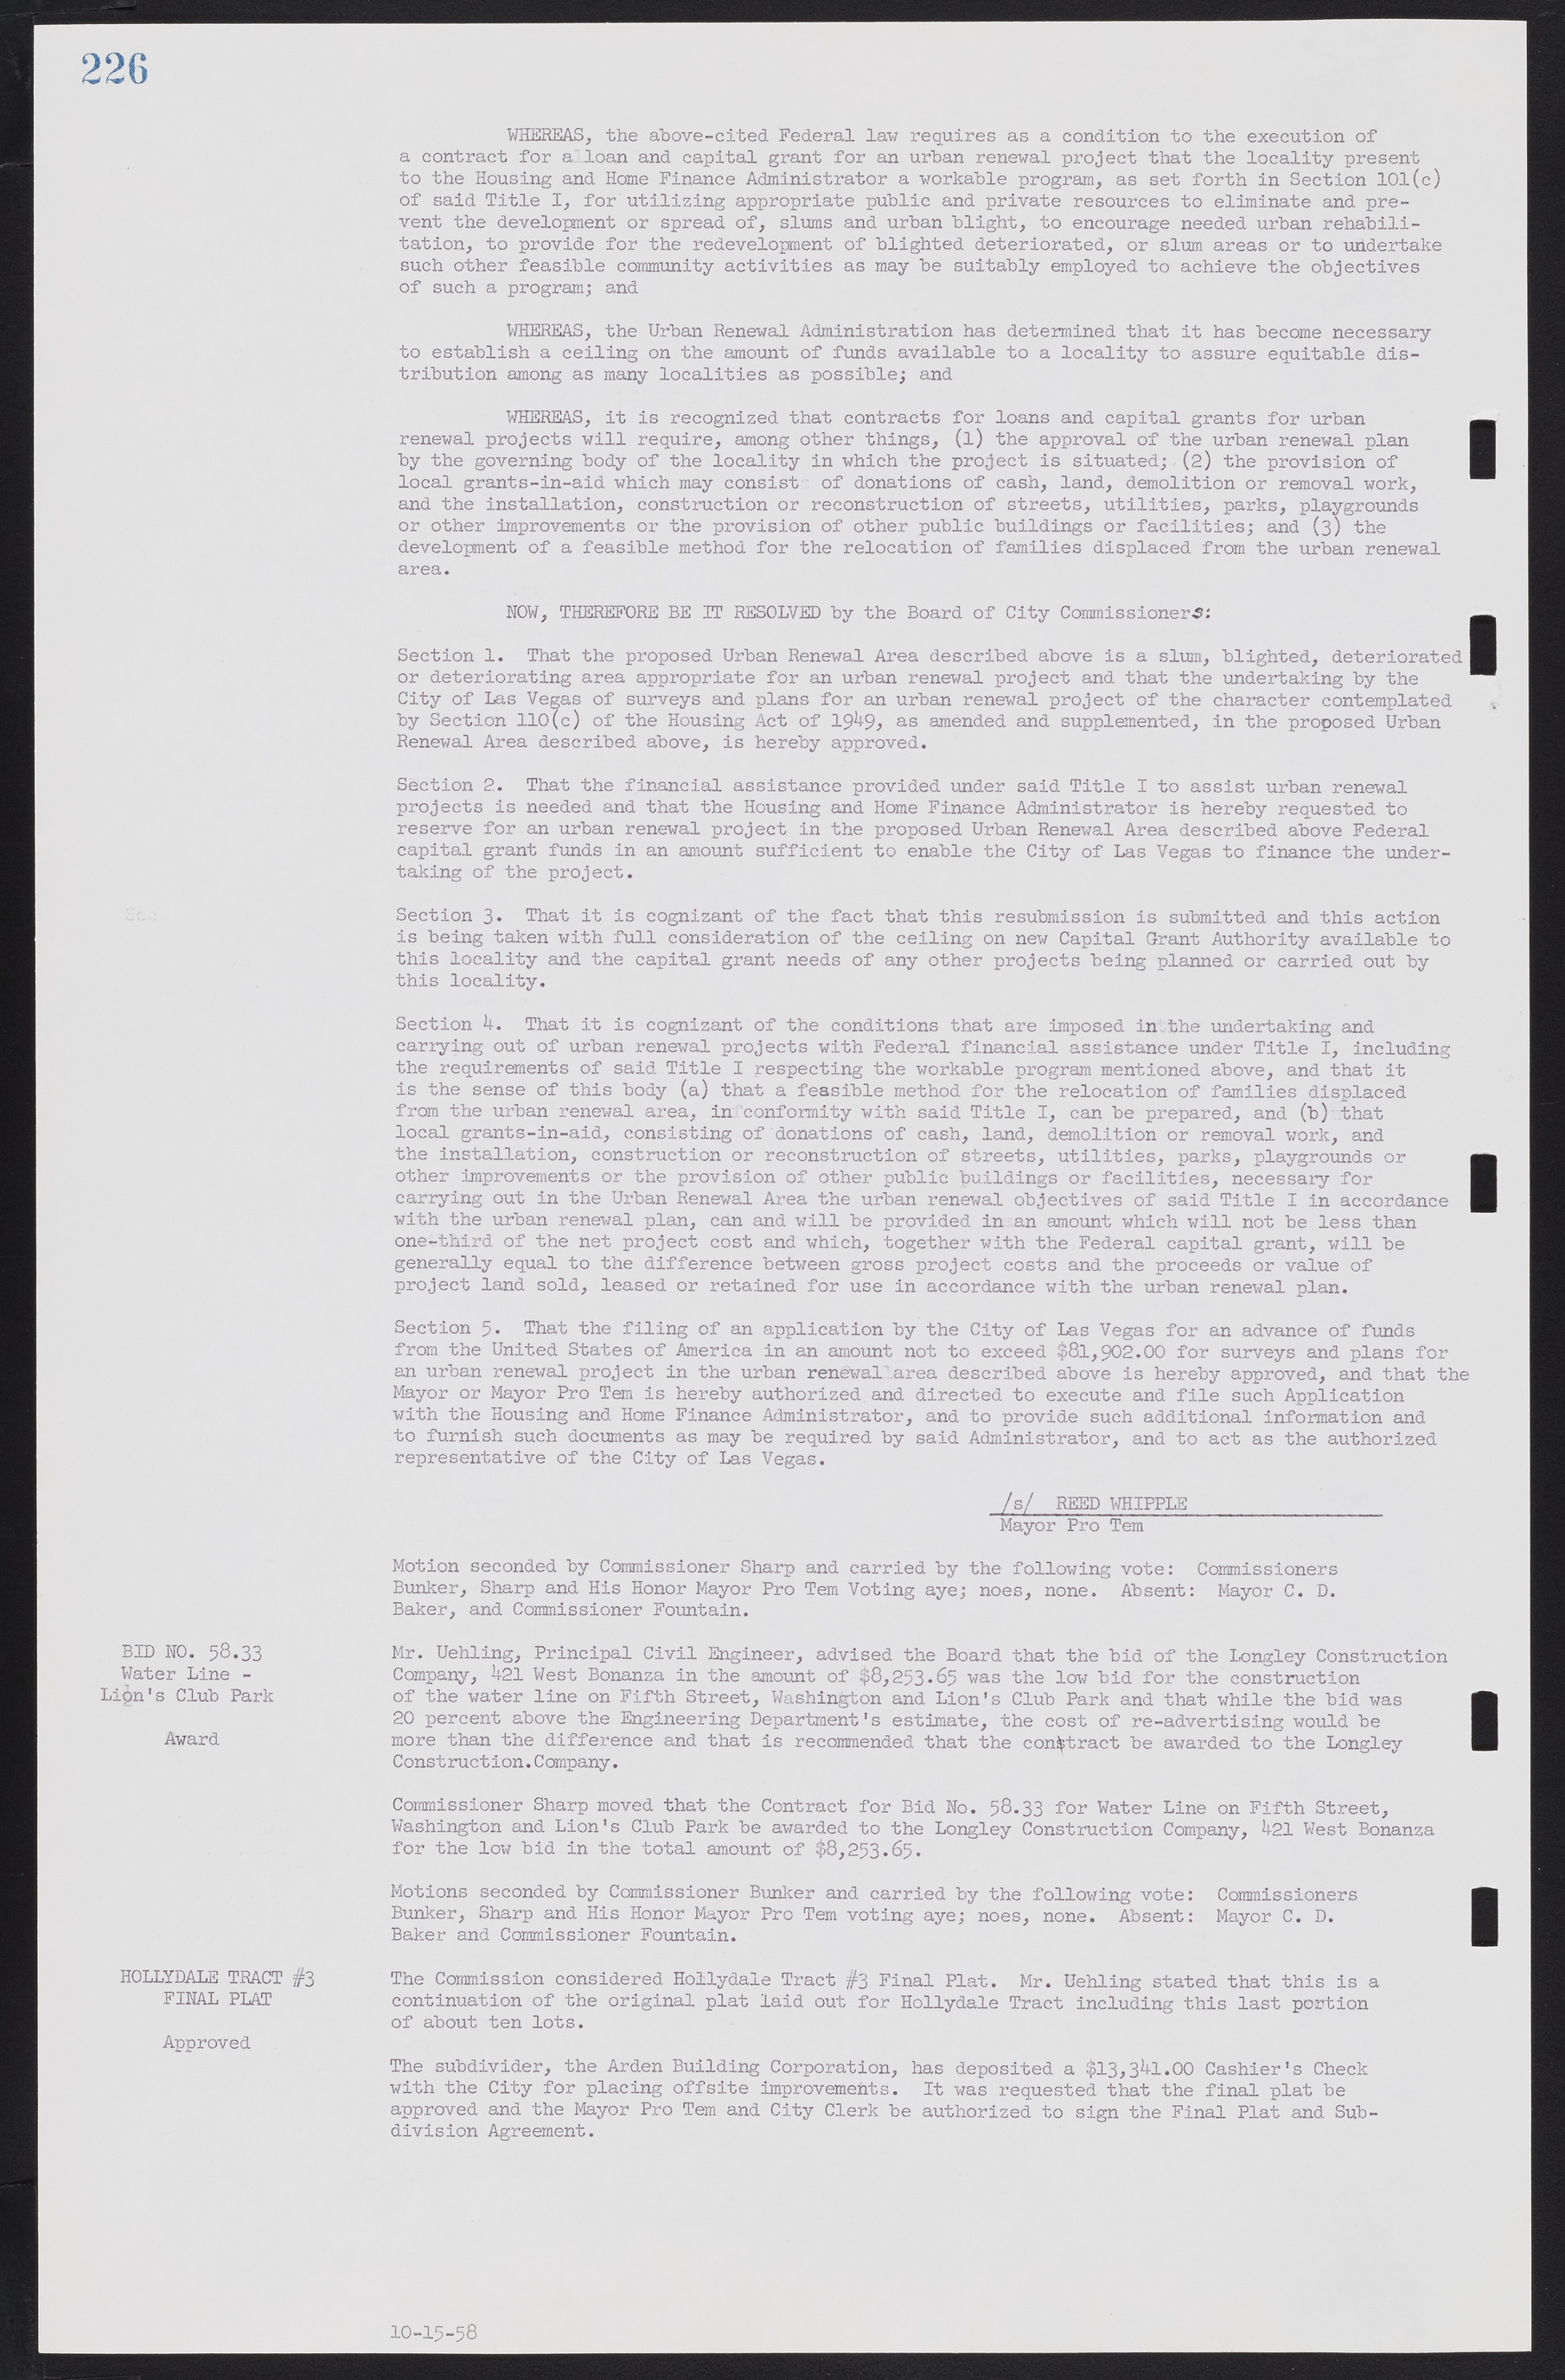 Las Vegas City Commission Minutes, November 20, 1957 to December 2, 1959, lvc000011-232